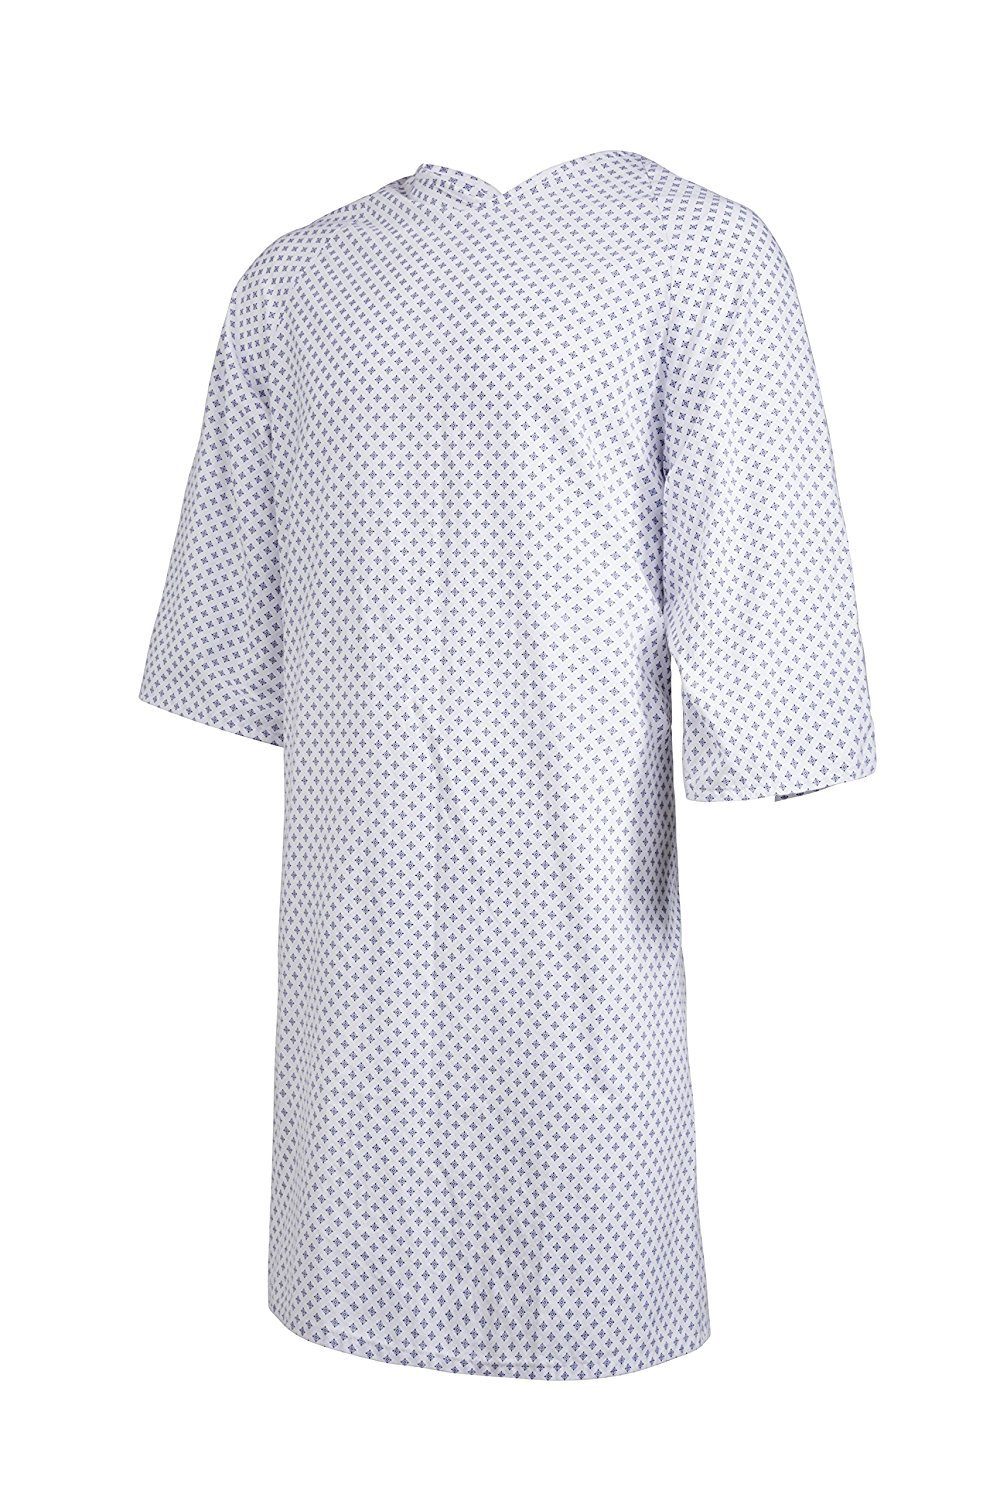 Clinotest Nachthemd Patientenhemd/Nachthemd/Krankenhaushemd/Pflegehemd | Nachthemden